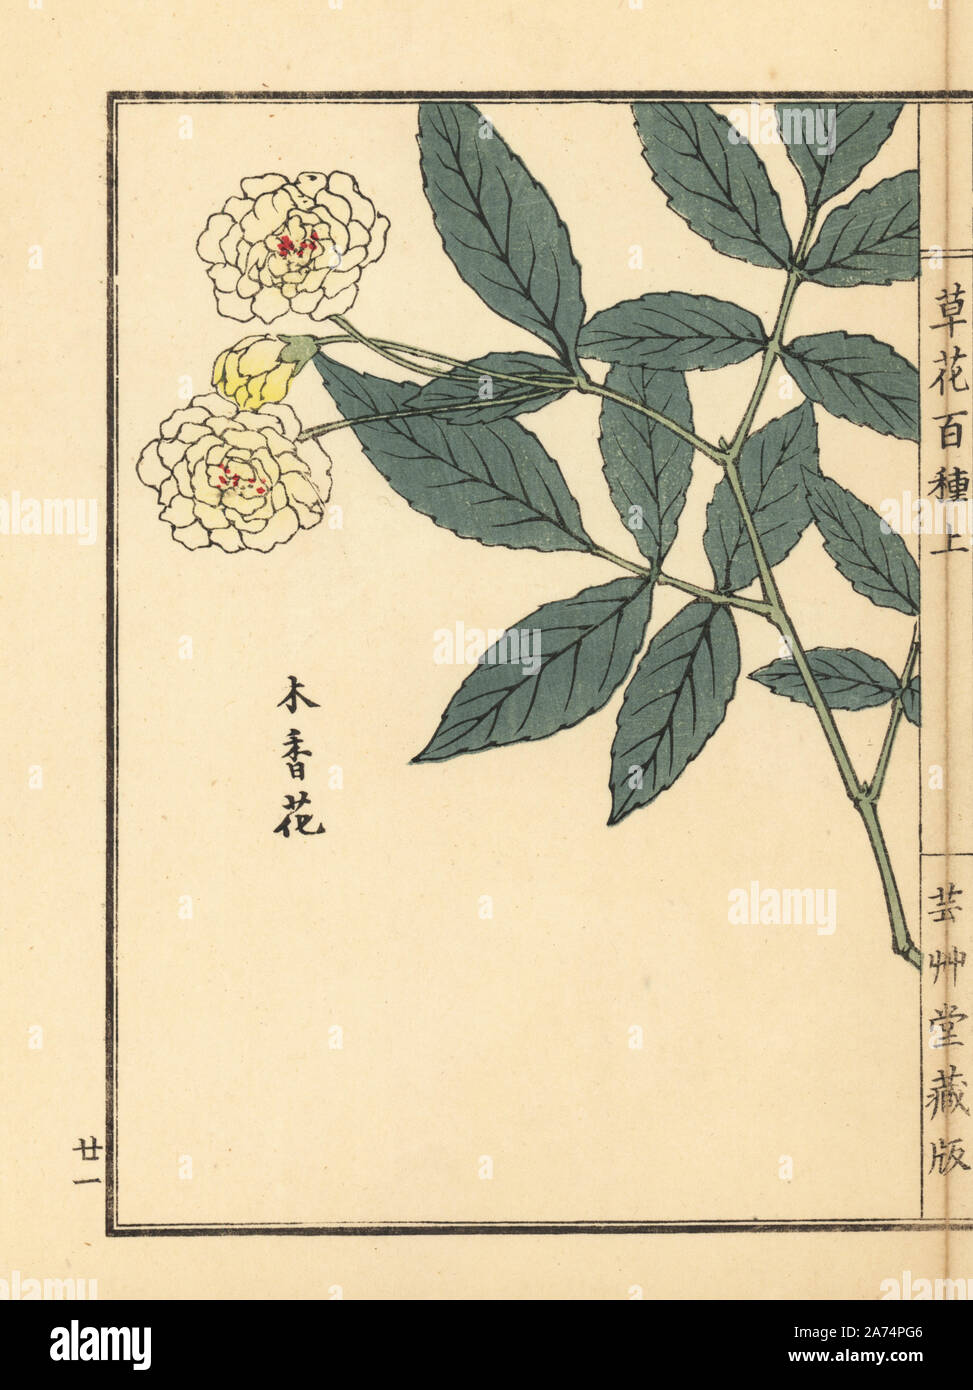 Mukkou bara o Lady banche" rosa, rosa banksiae. Handcolored woodblock print da Kono Bairei da Kusa Bana Hyakushu (un centinaio di varietà di fiori), Tokyo, Yamada, 1901. Foto Stock